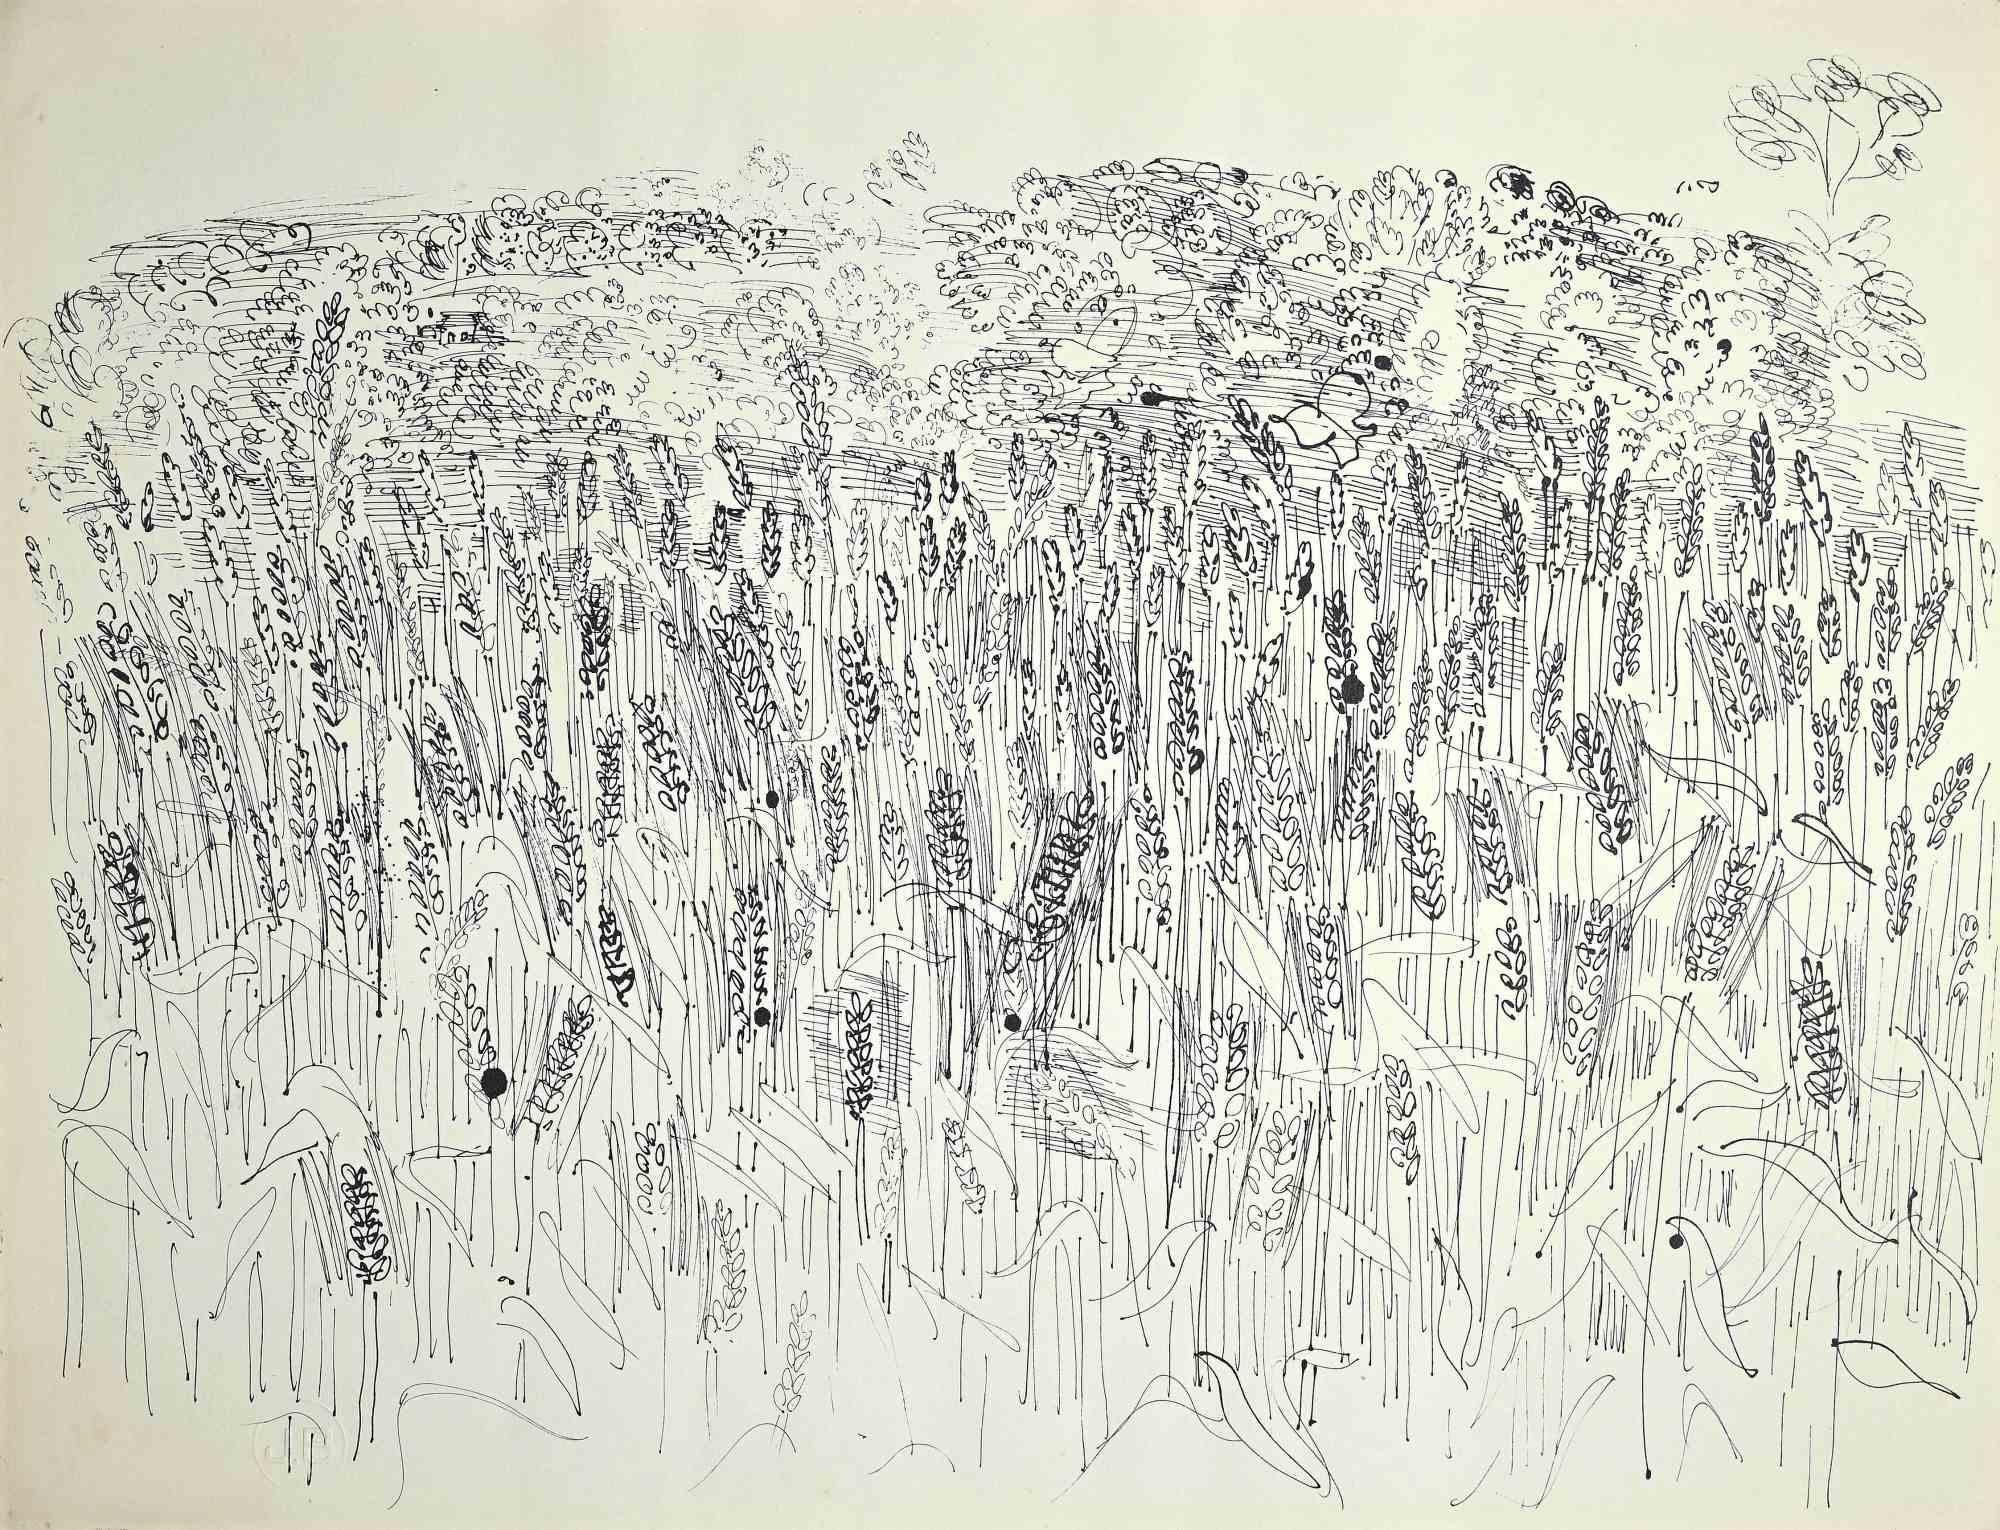 Unknown Figurative Print - Wheat Field - Original Lithograph by Raoul Dufy - 1933